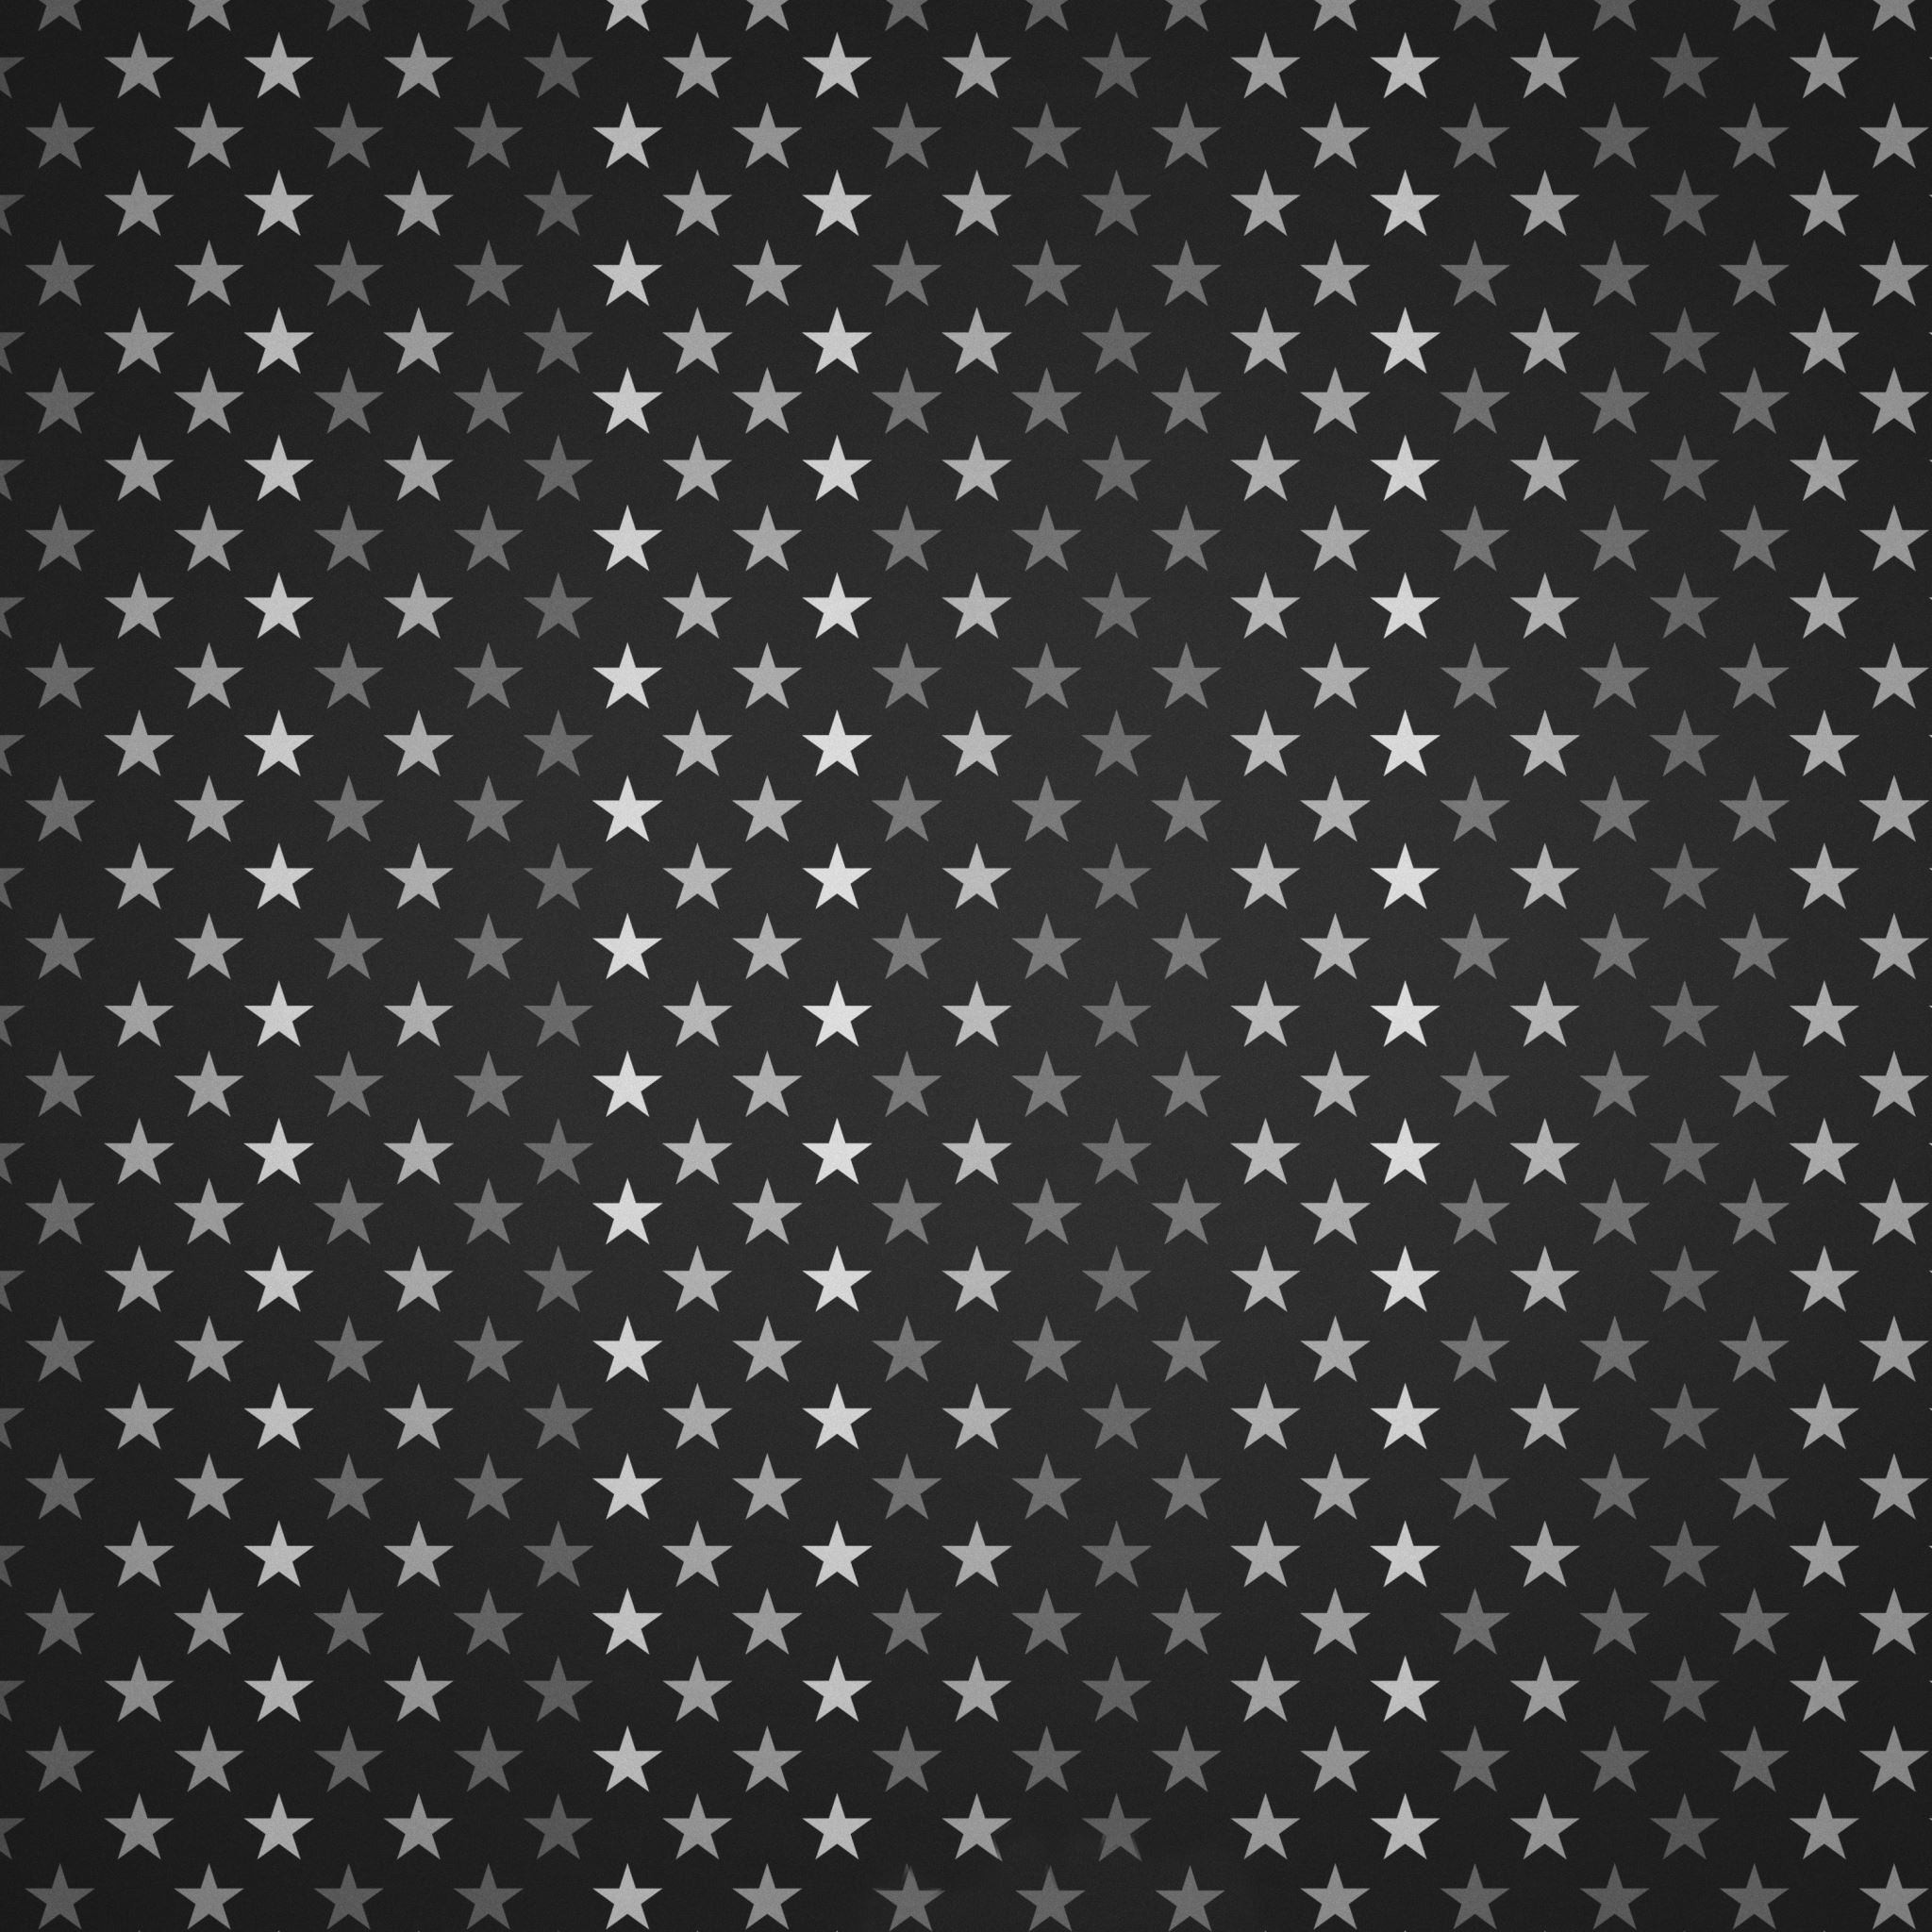 Stars pattern black and white iPad Air wallpaper 